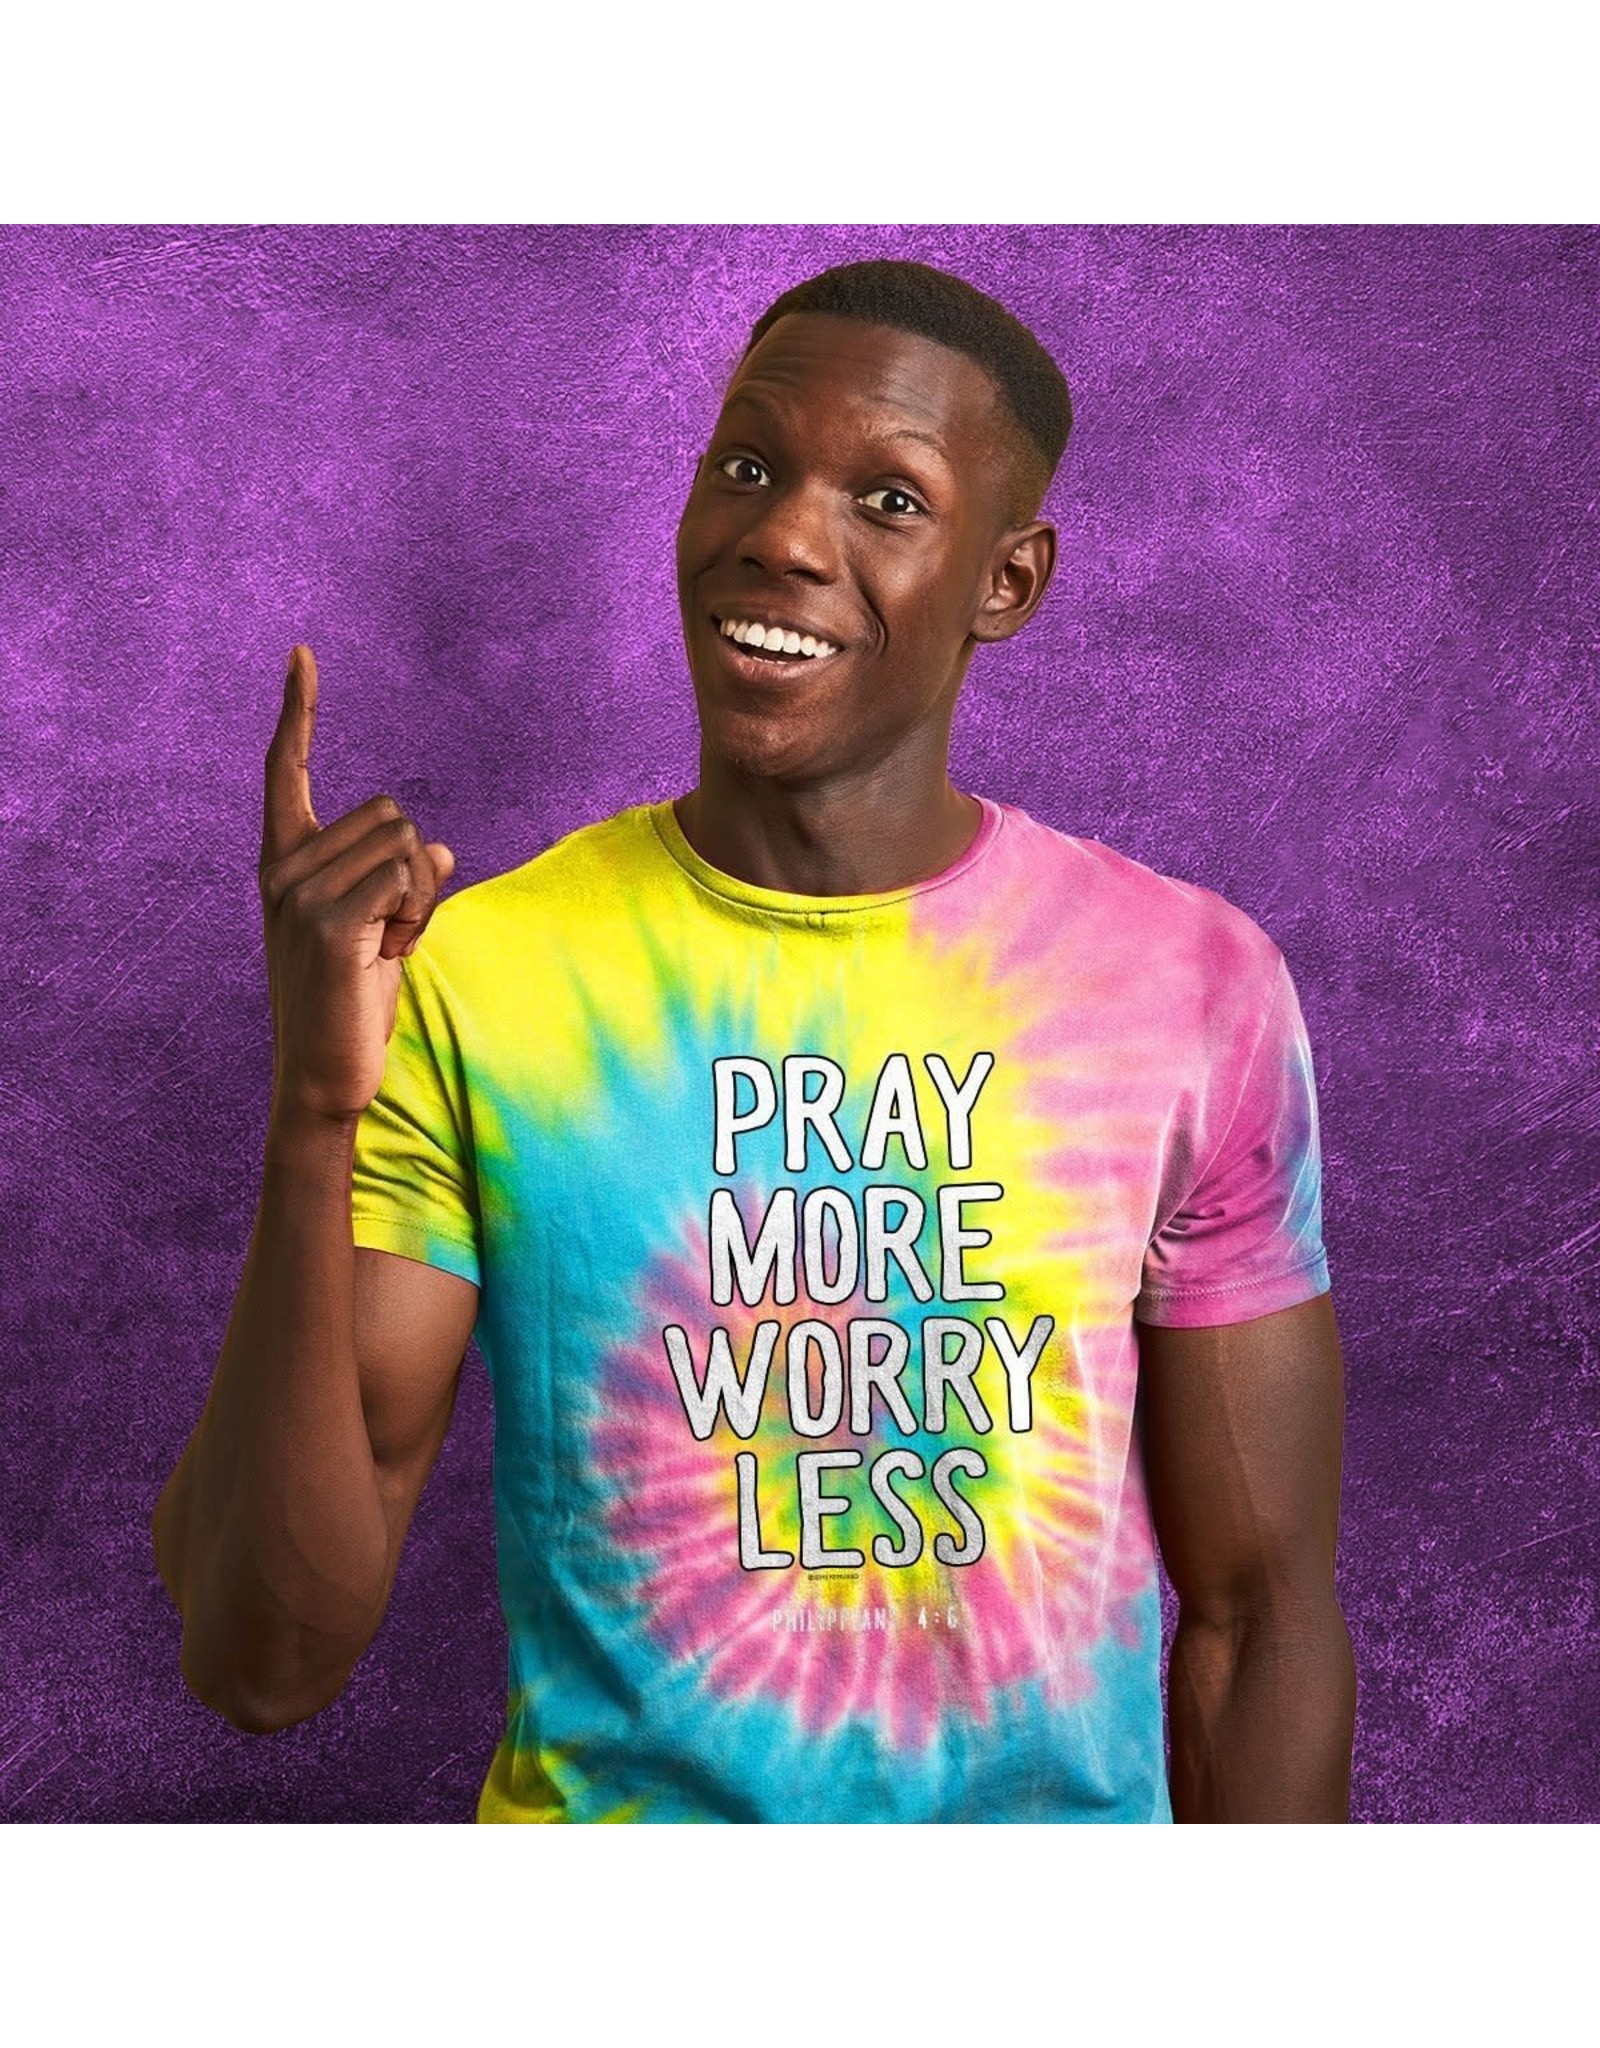 Adult Shirt - Pray More (Tie Dye)